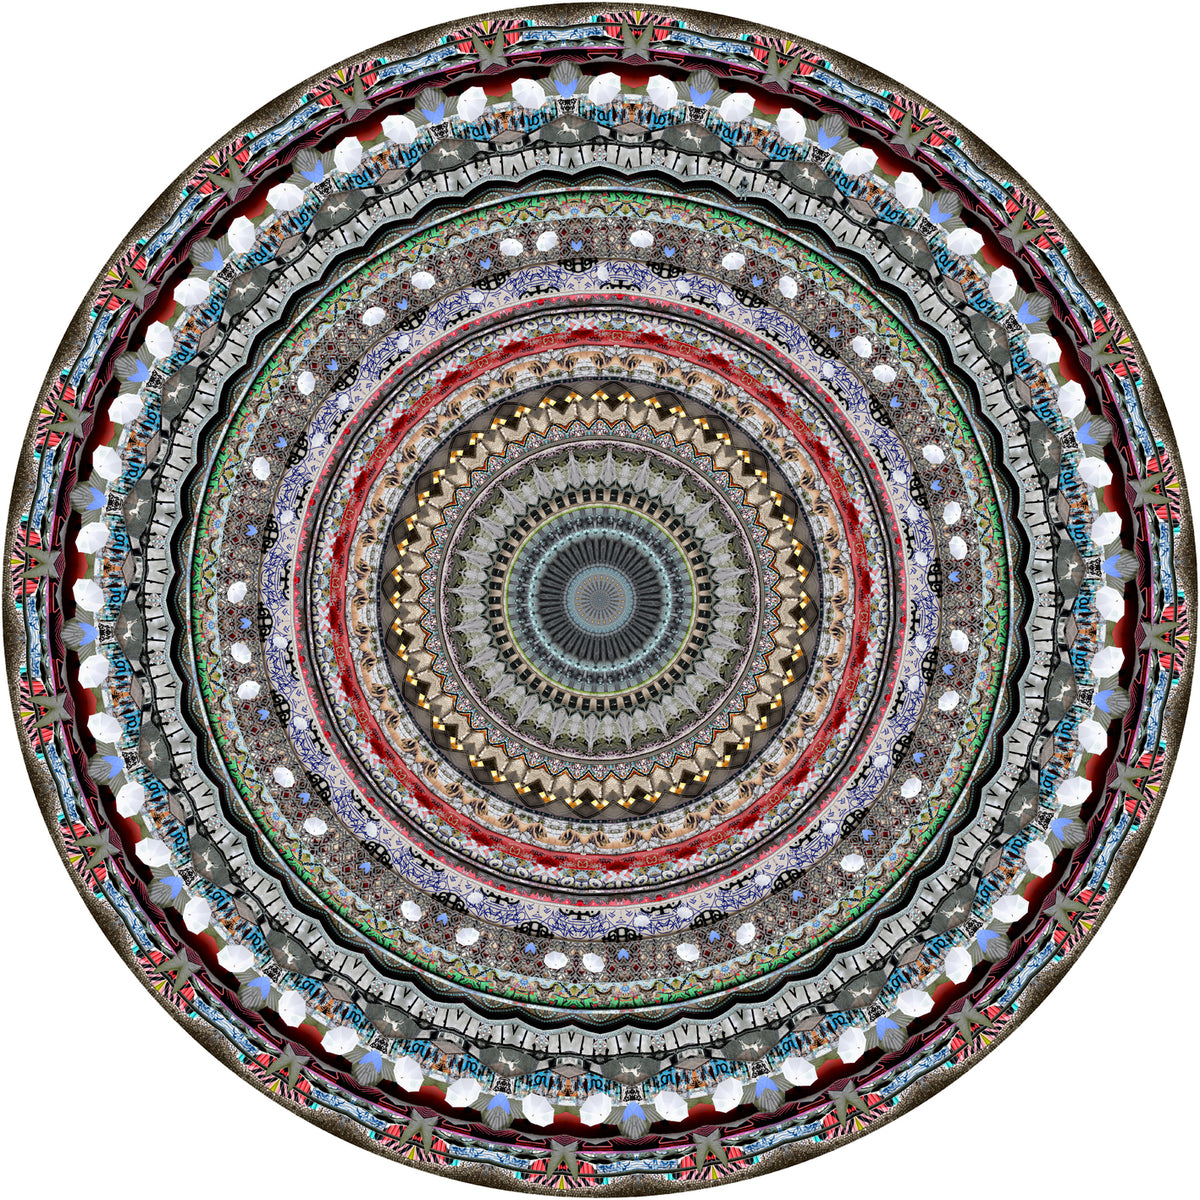 Urban Mandala Collection Rugs by Moooi Carpets